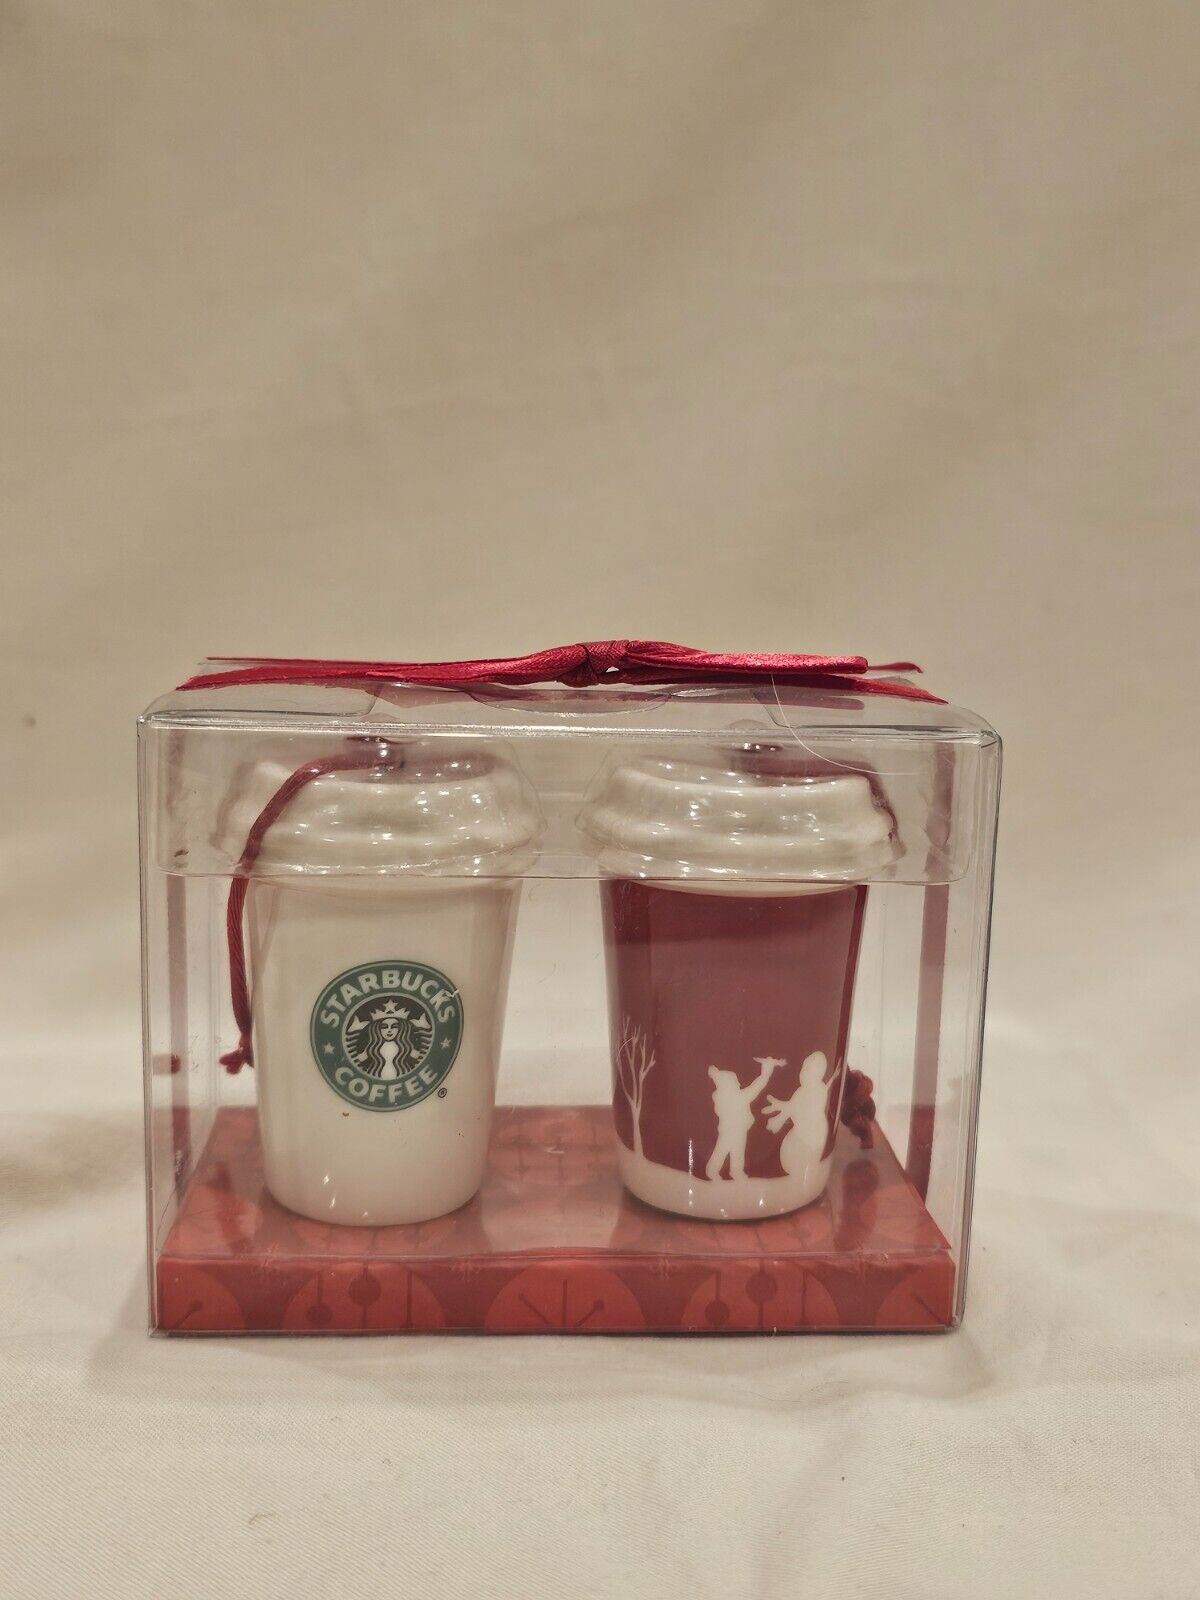 2006 Starbucks 2 cup ornament set